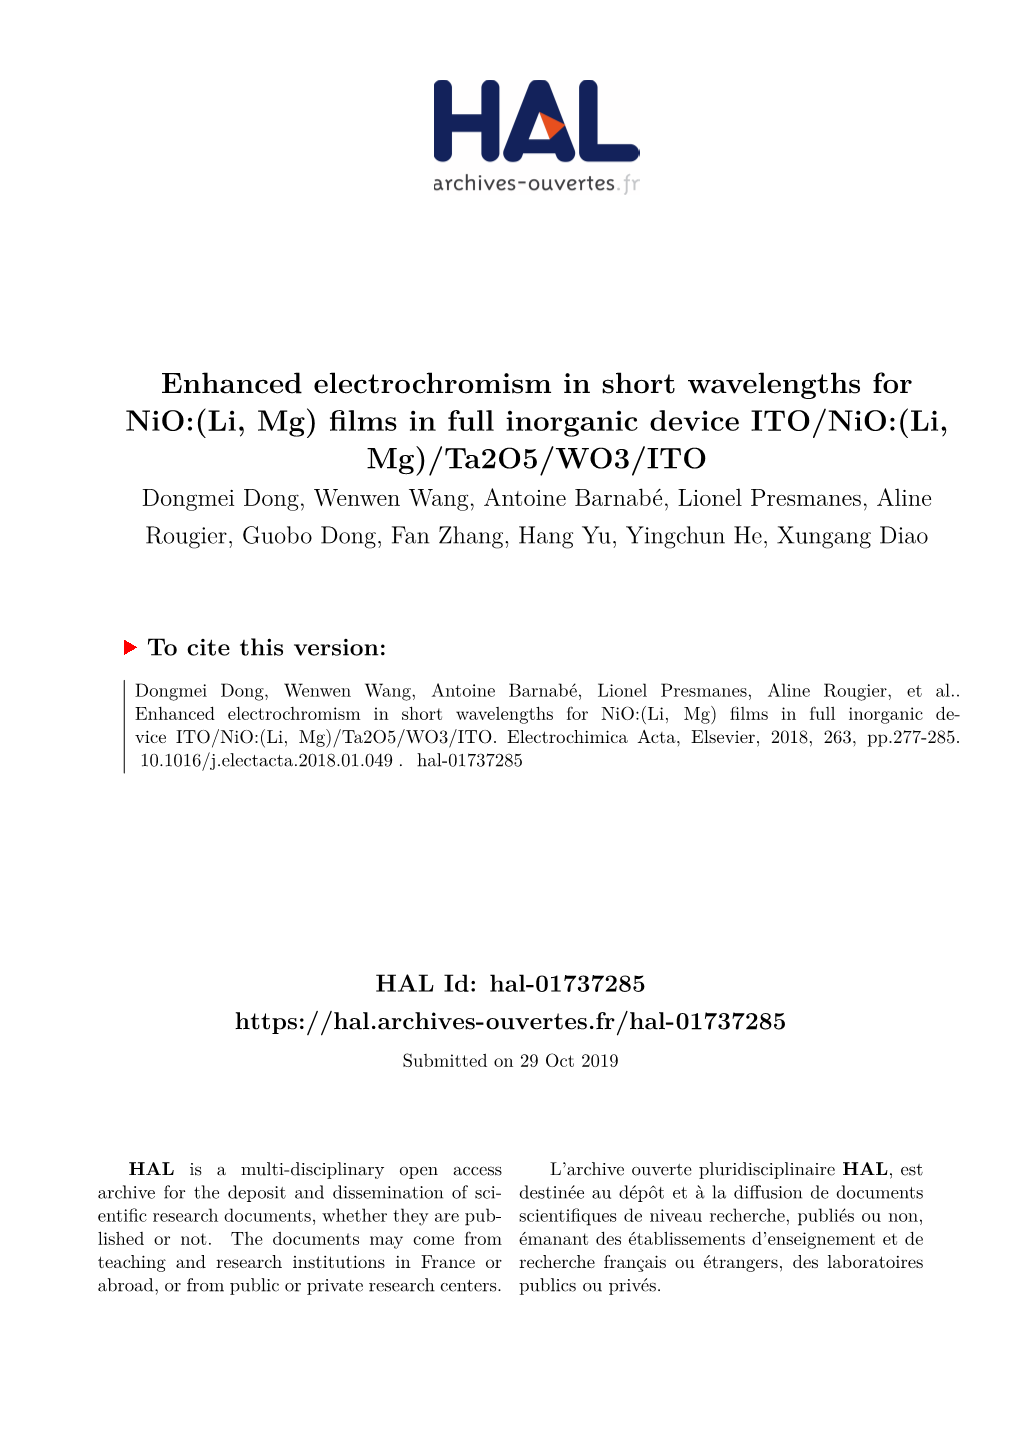 Enhanced Electrochromism in Short Wavelengths for Nio:(Li, Mg) Films In